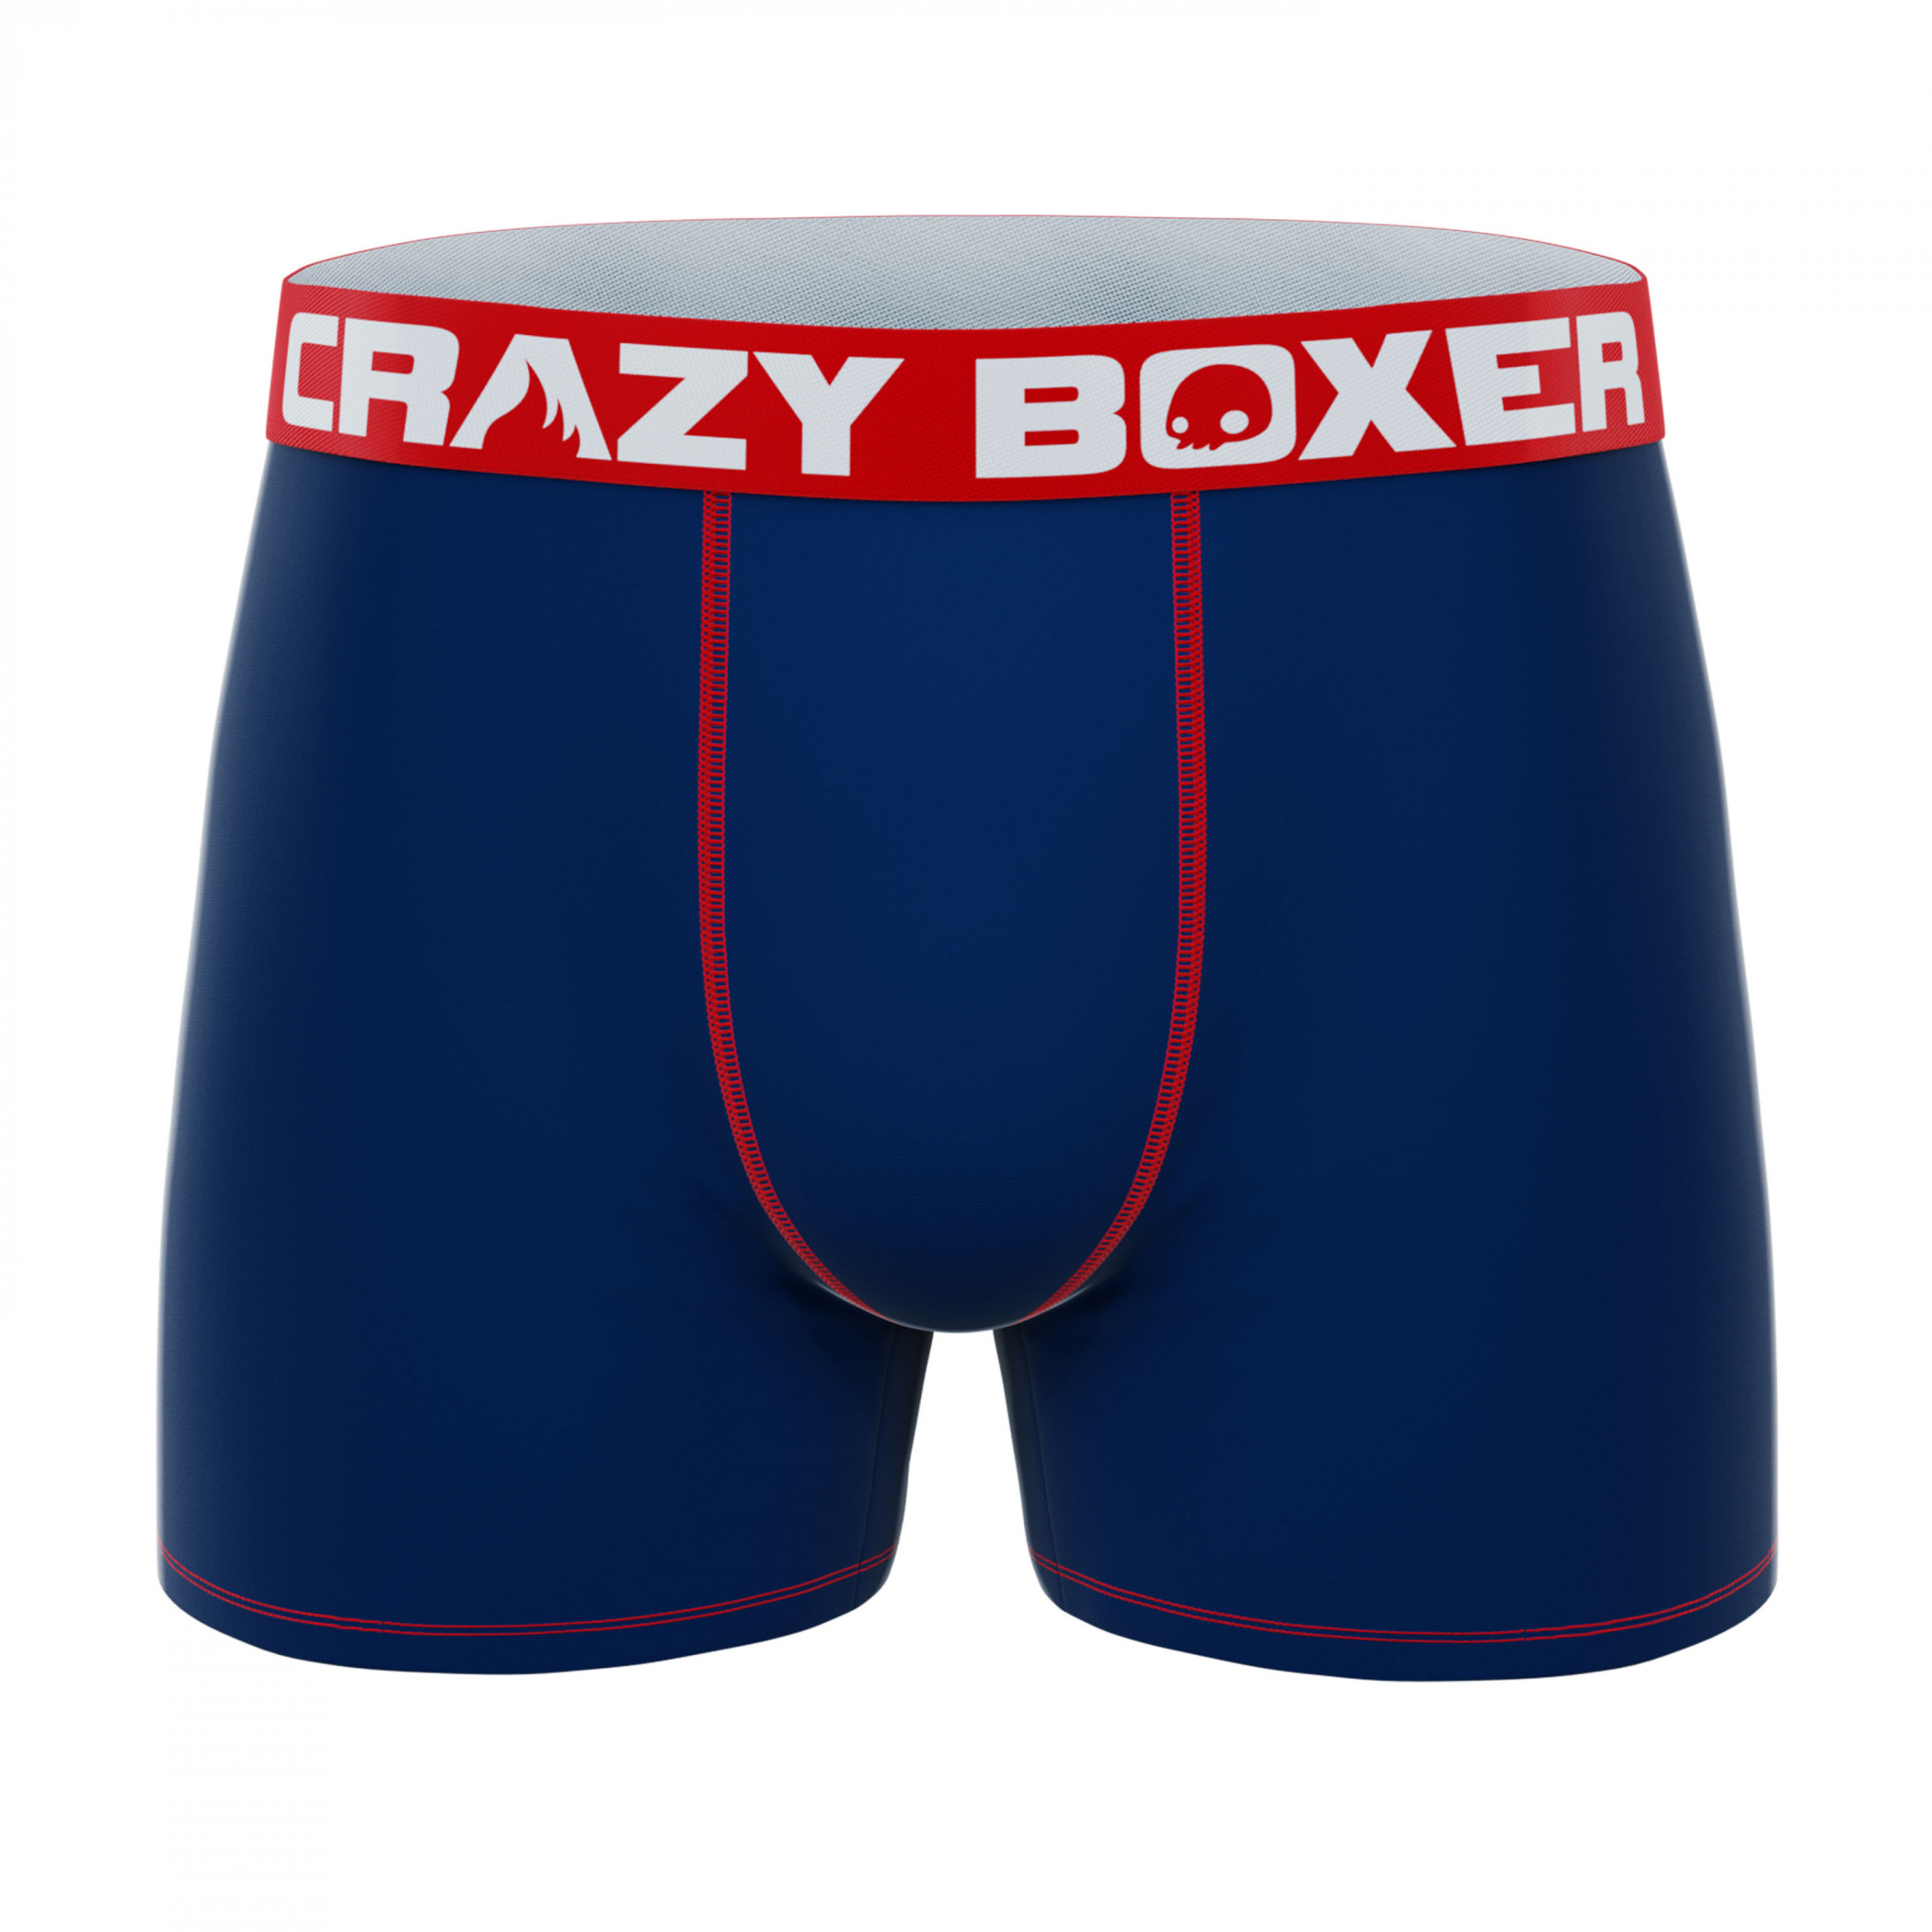 Crazy Boxers Lilo and Stitch Boxer Briefs 3-Pack